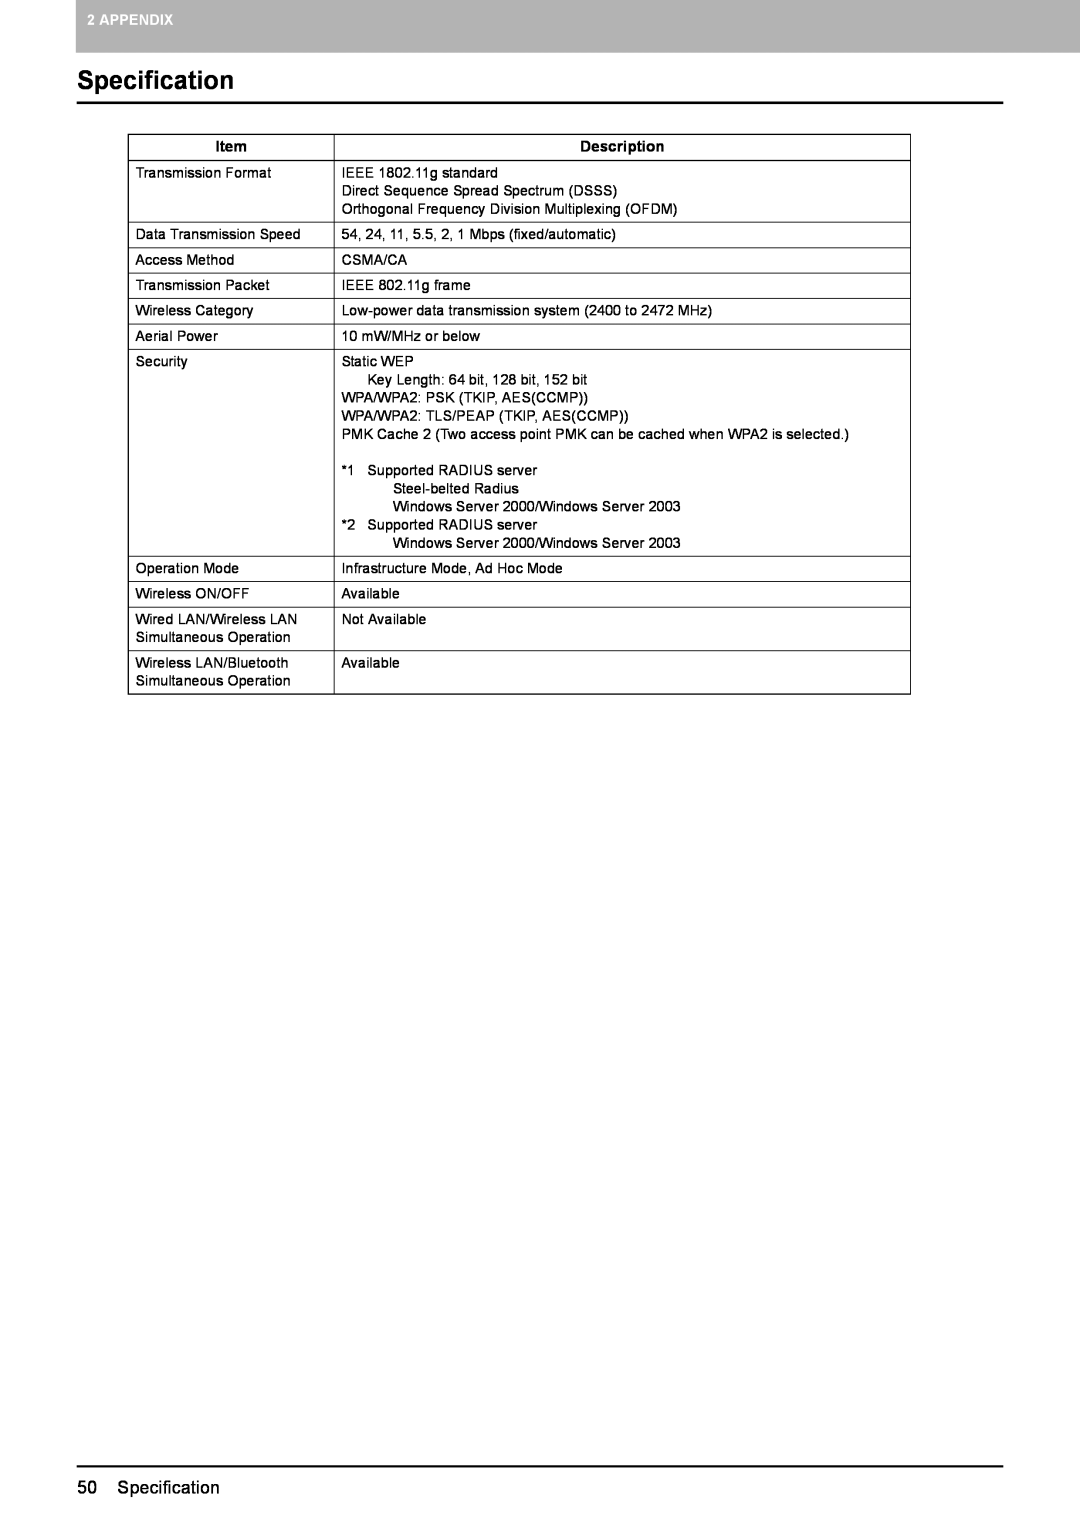 Toshiba GN-1050 manual Specification, Appendix, Description 